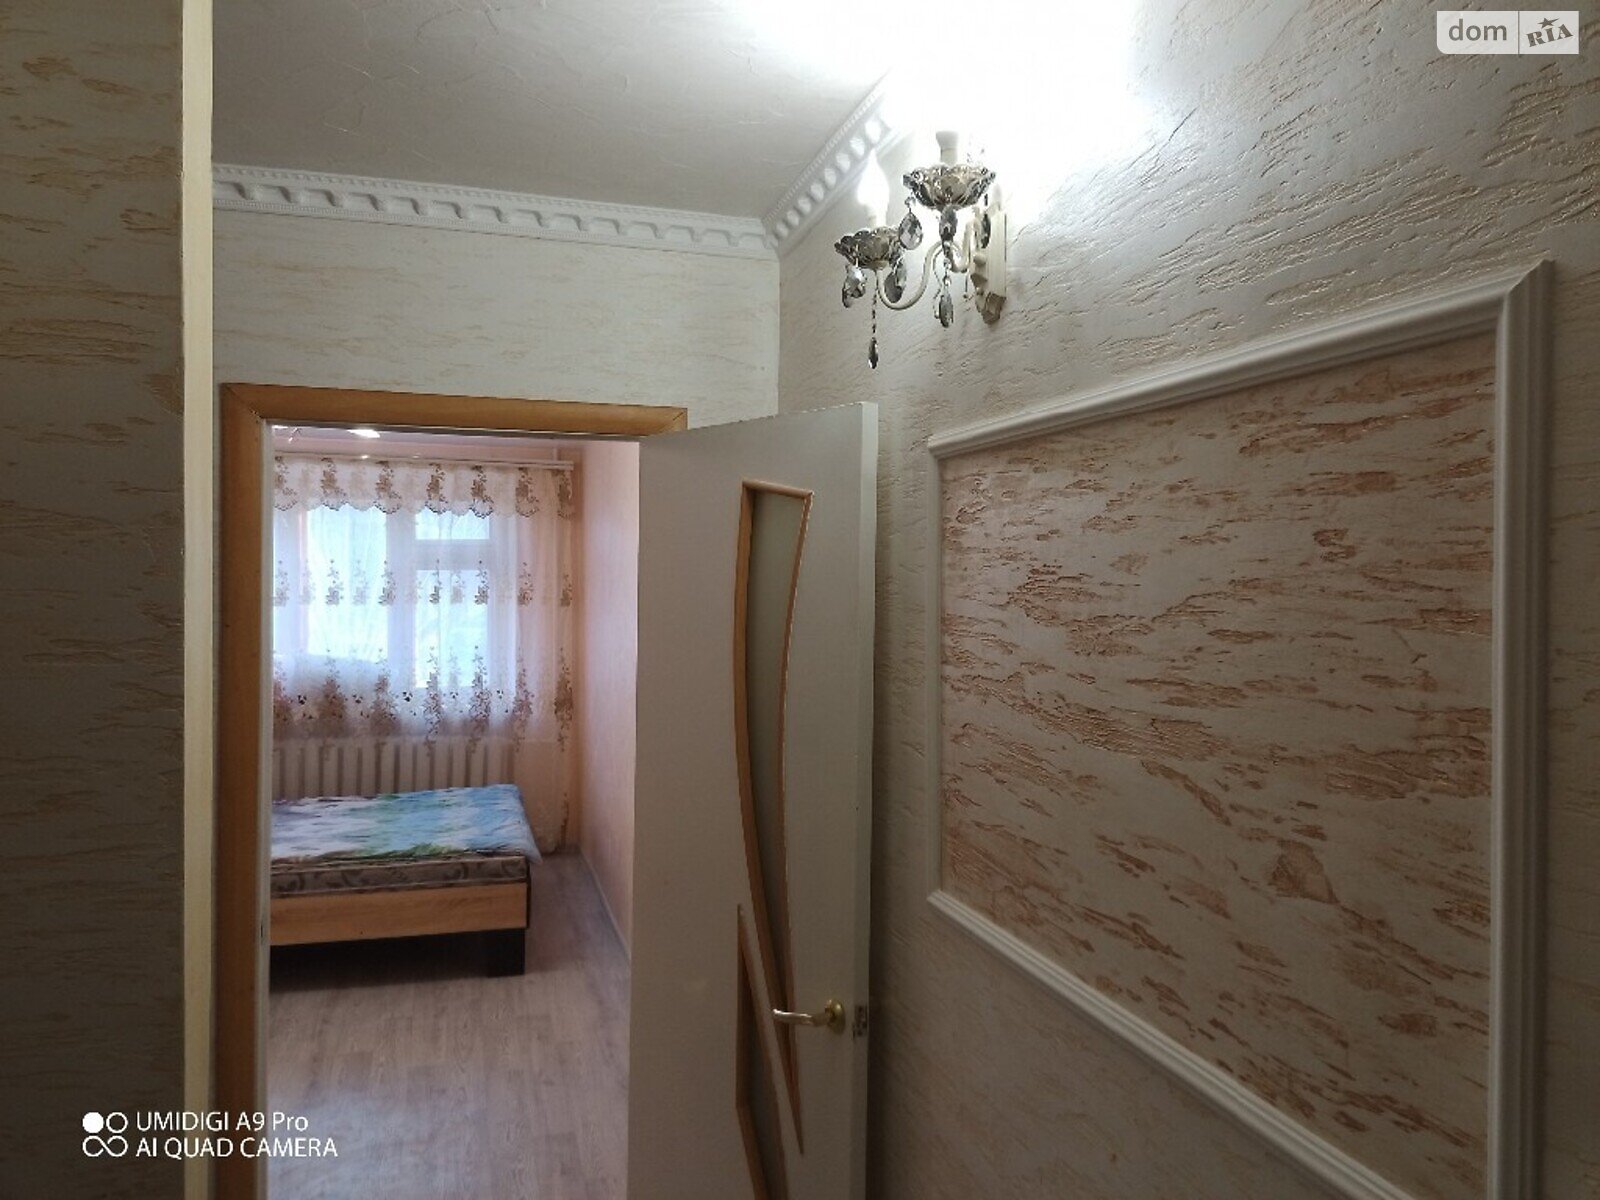 двухкомнатная квартира в Одессе, район Черемушки, на ул. Академика Филатова 40, кв. 5 в аренду на короткий срок посуточно фото 1